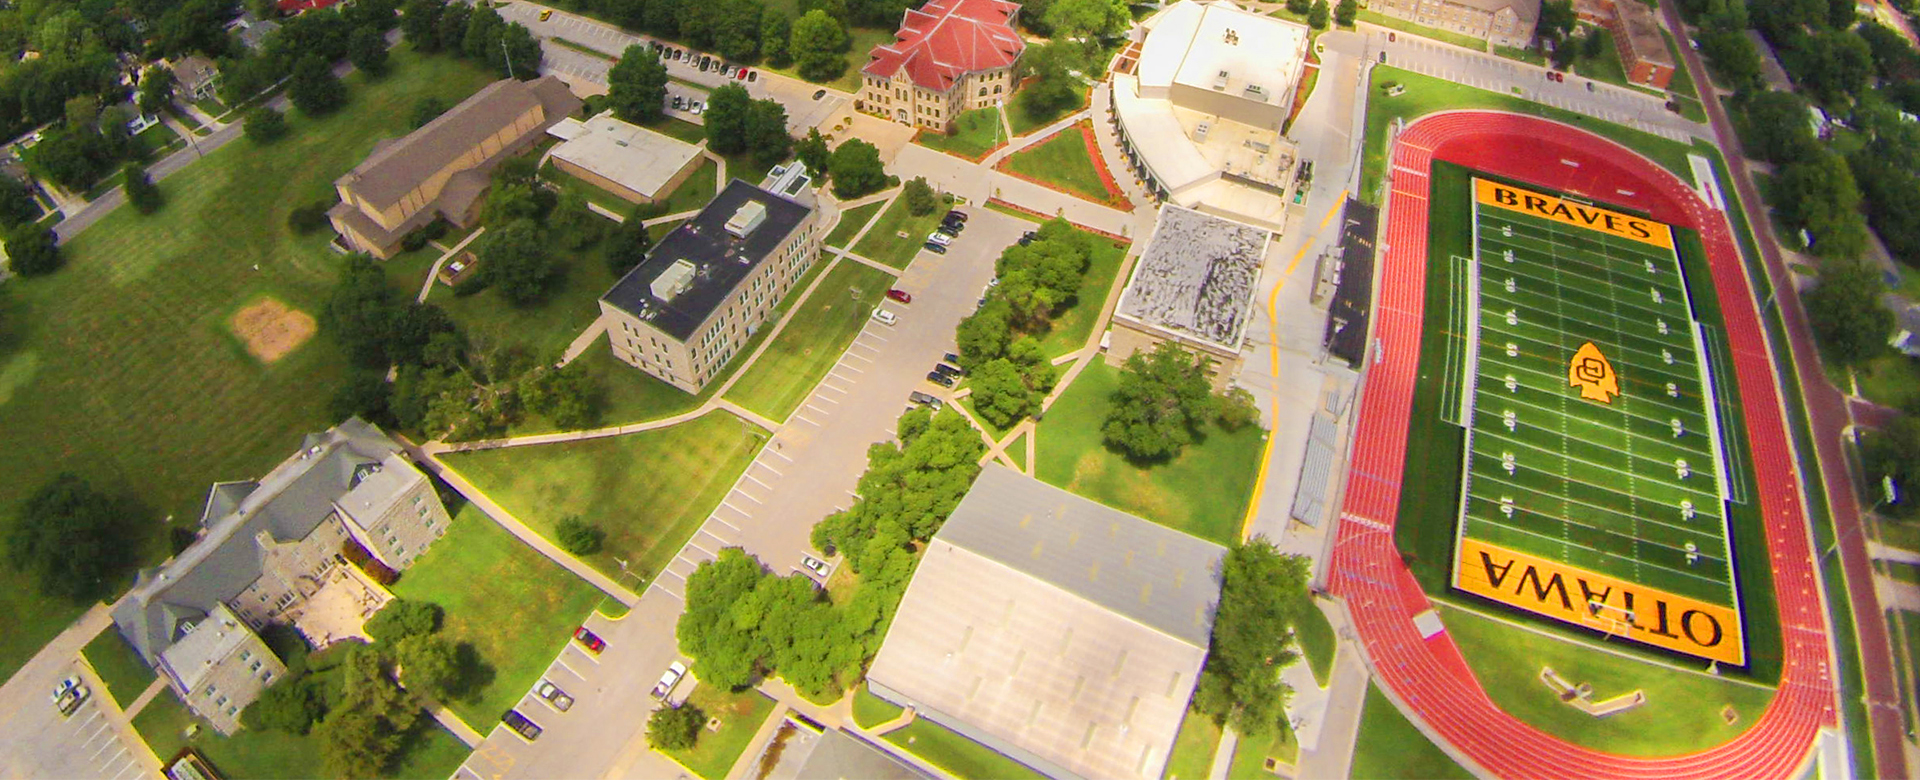 university of kansas campus aerial